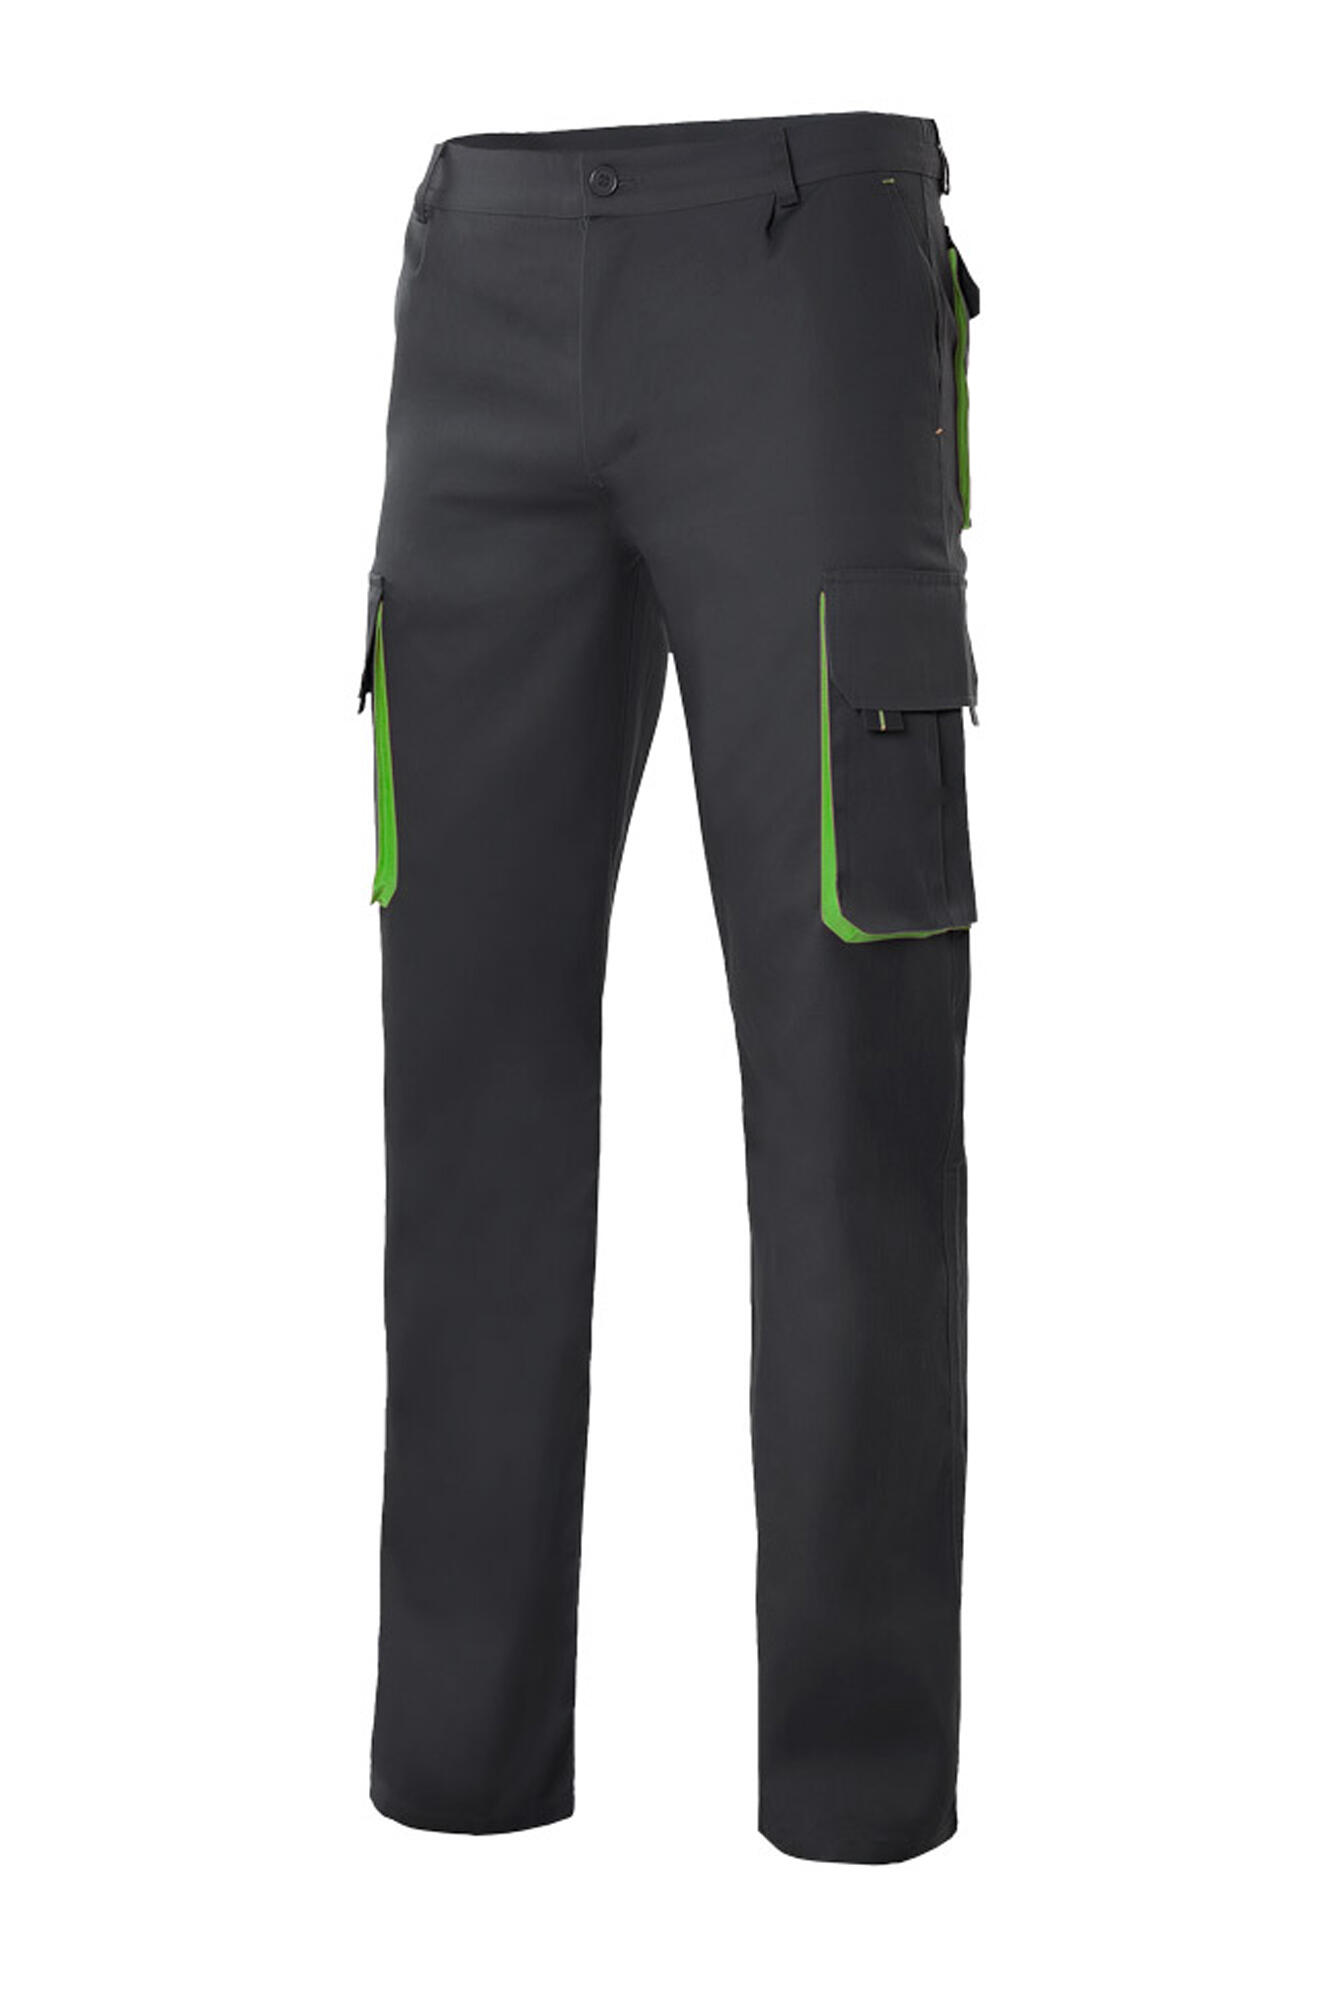 Pantalon de trabajo bicolor multibol negr/verdelima t34